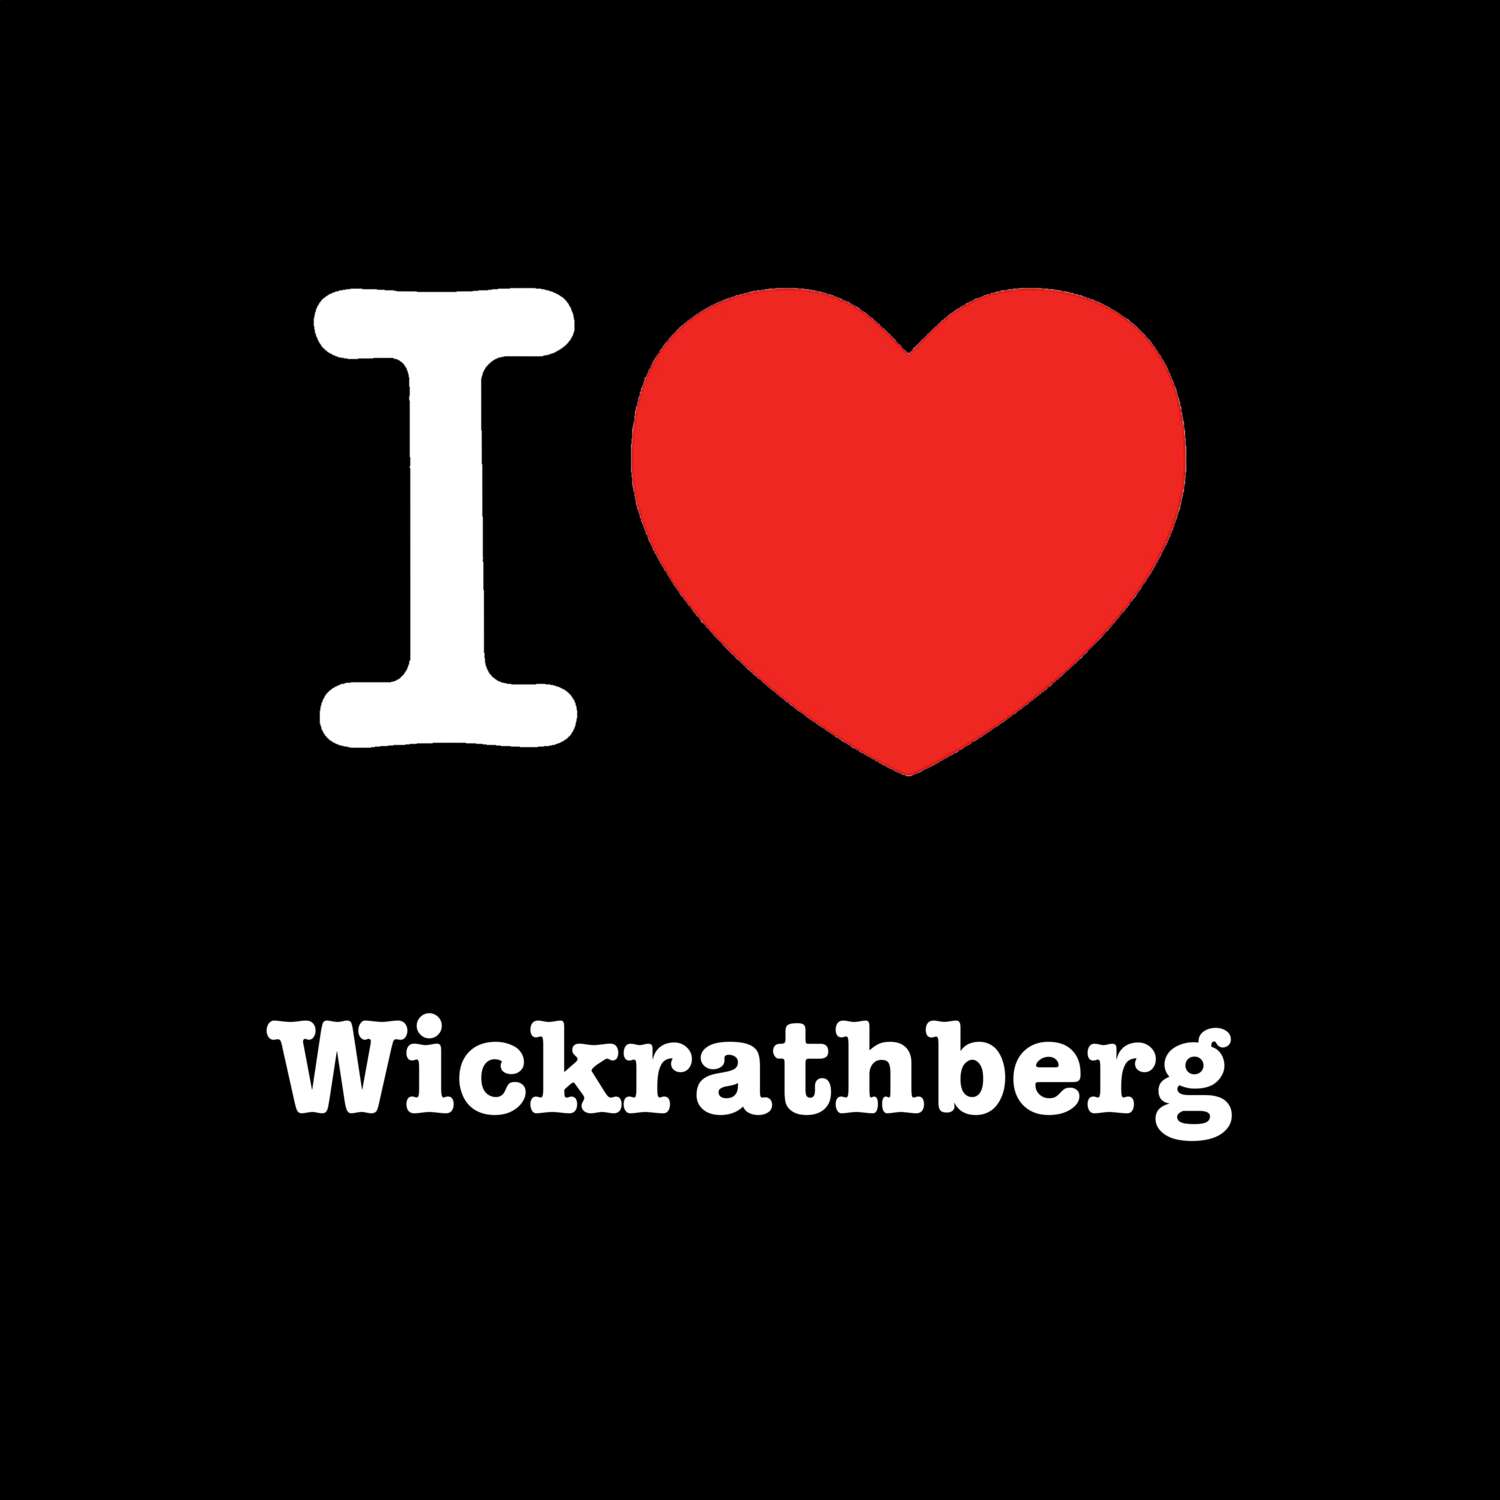 Wickrathberg T-Shirt »I love«